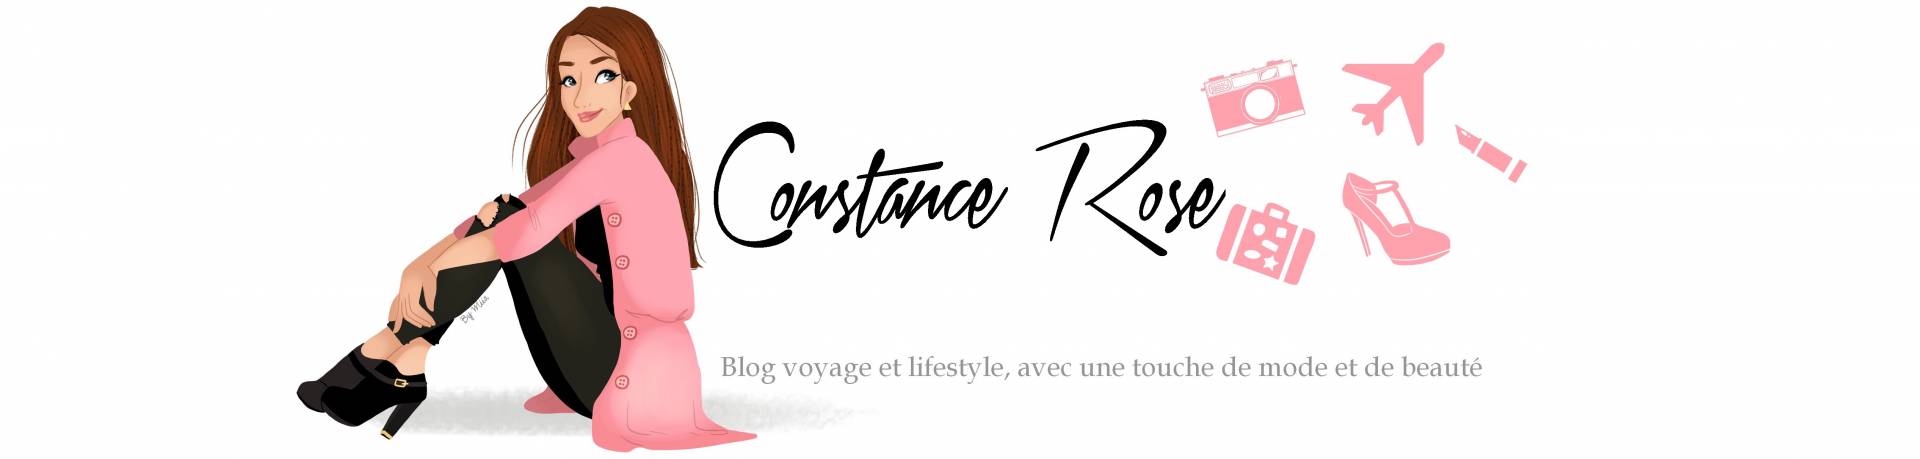 Constance Rose